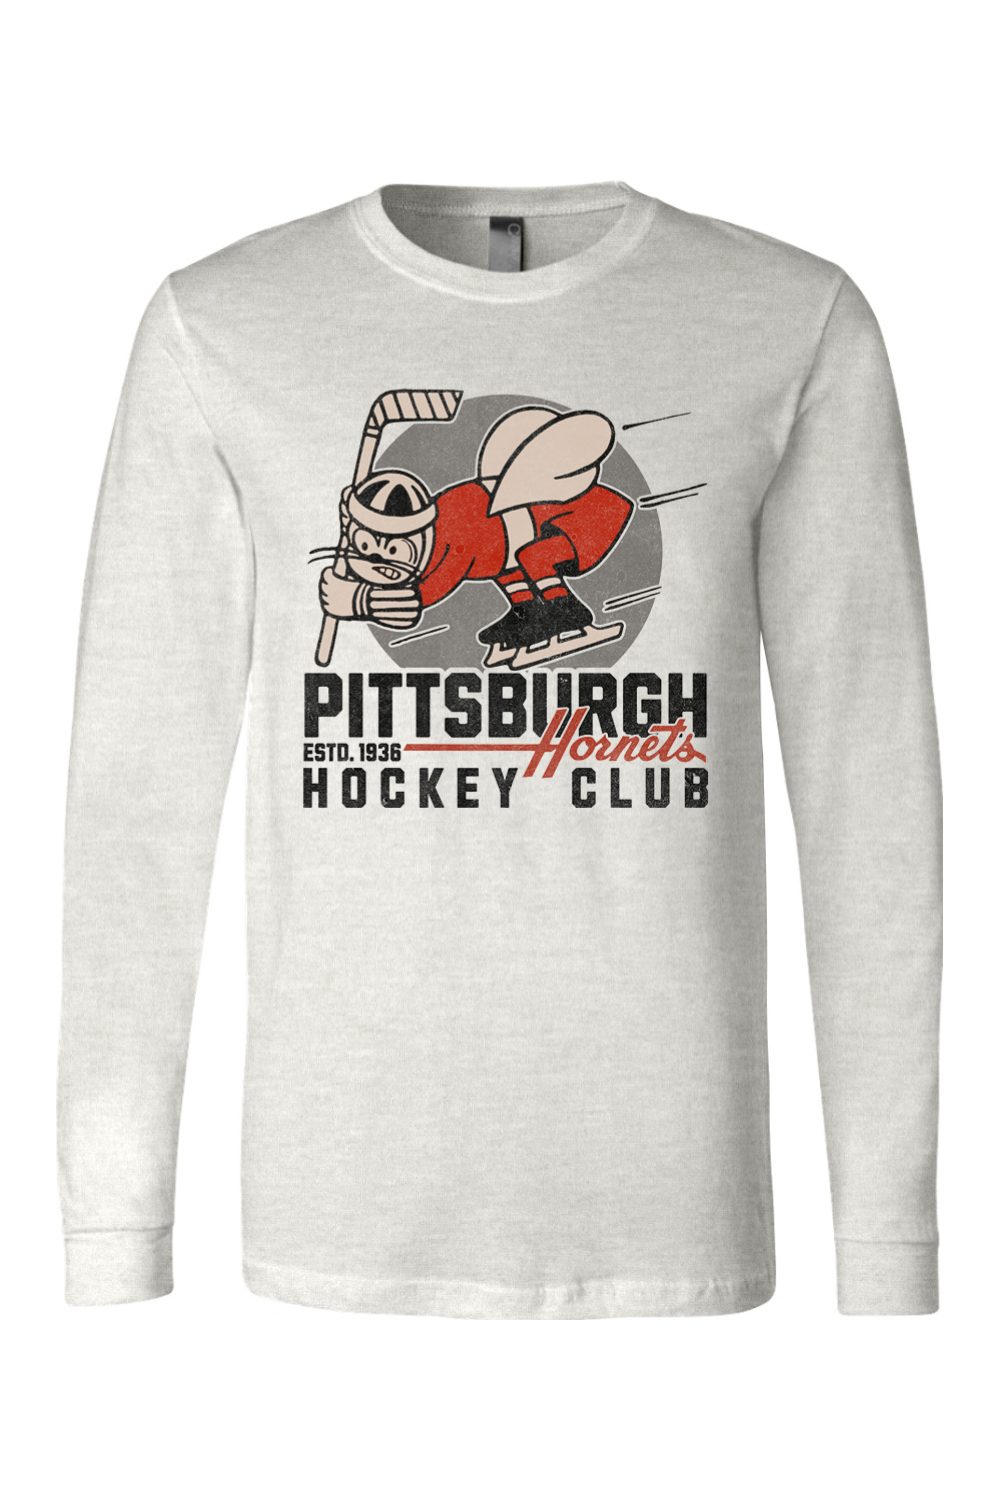 Pittsburgh Hornets Hockey - 1936 - Long Sleeve Tee - Yinzylvania